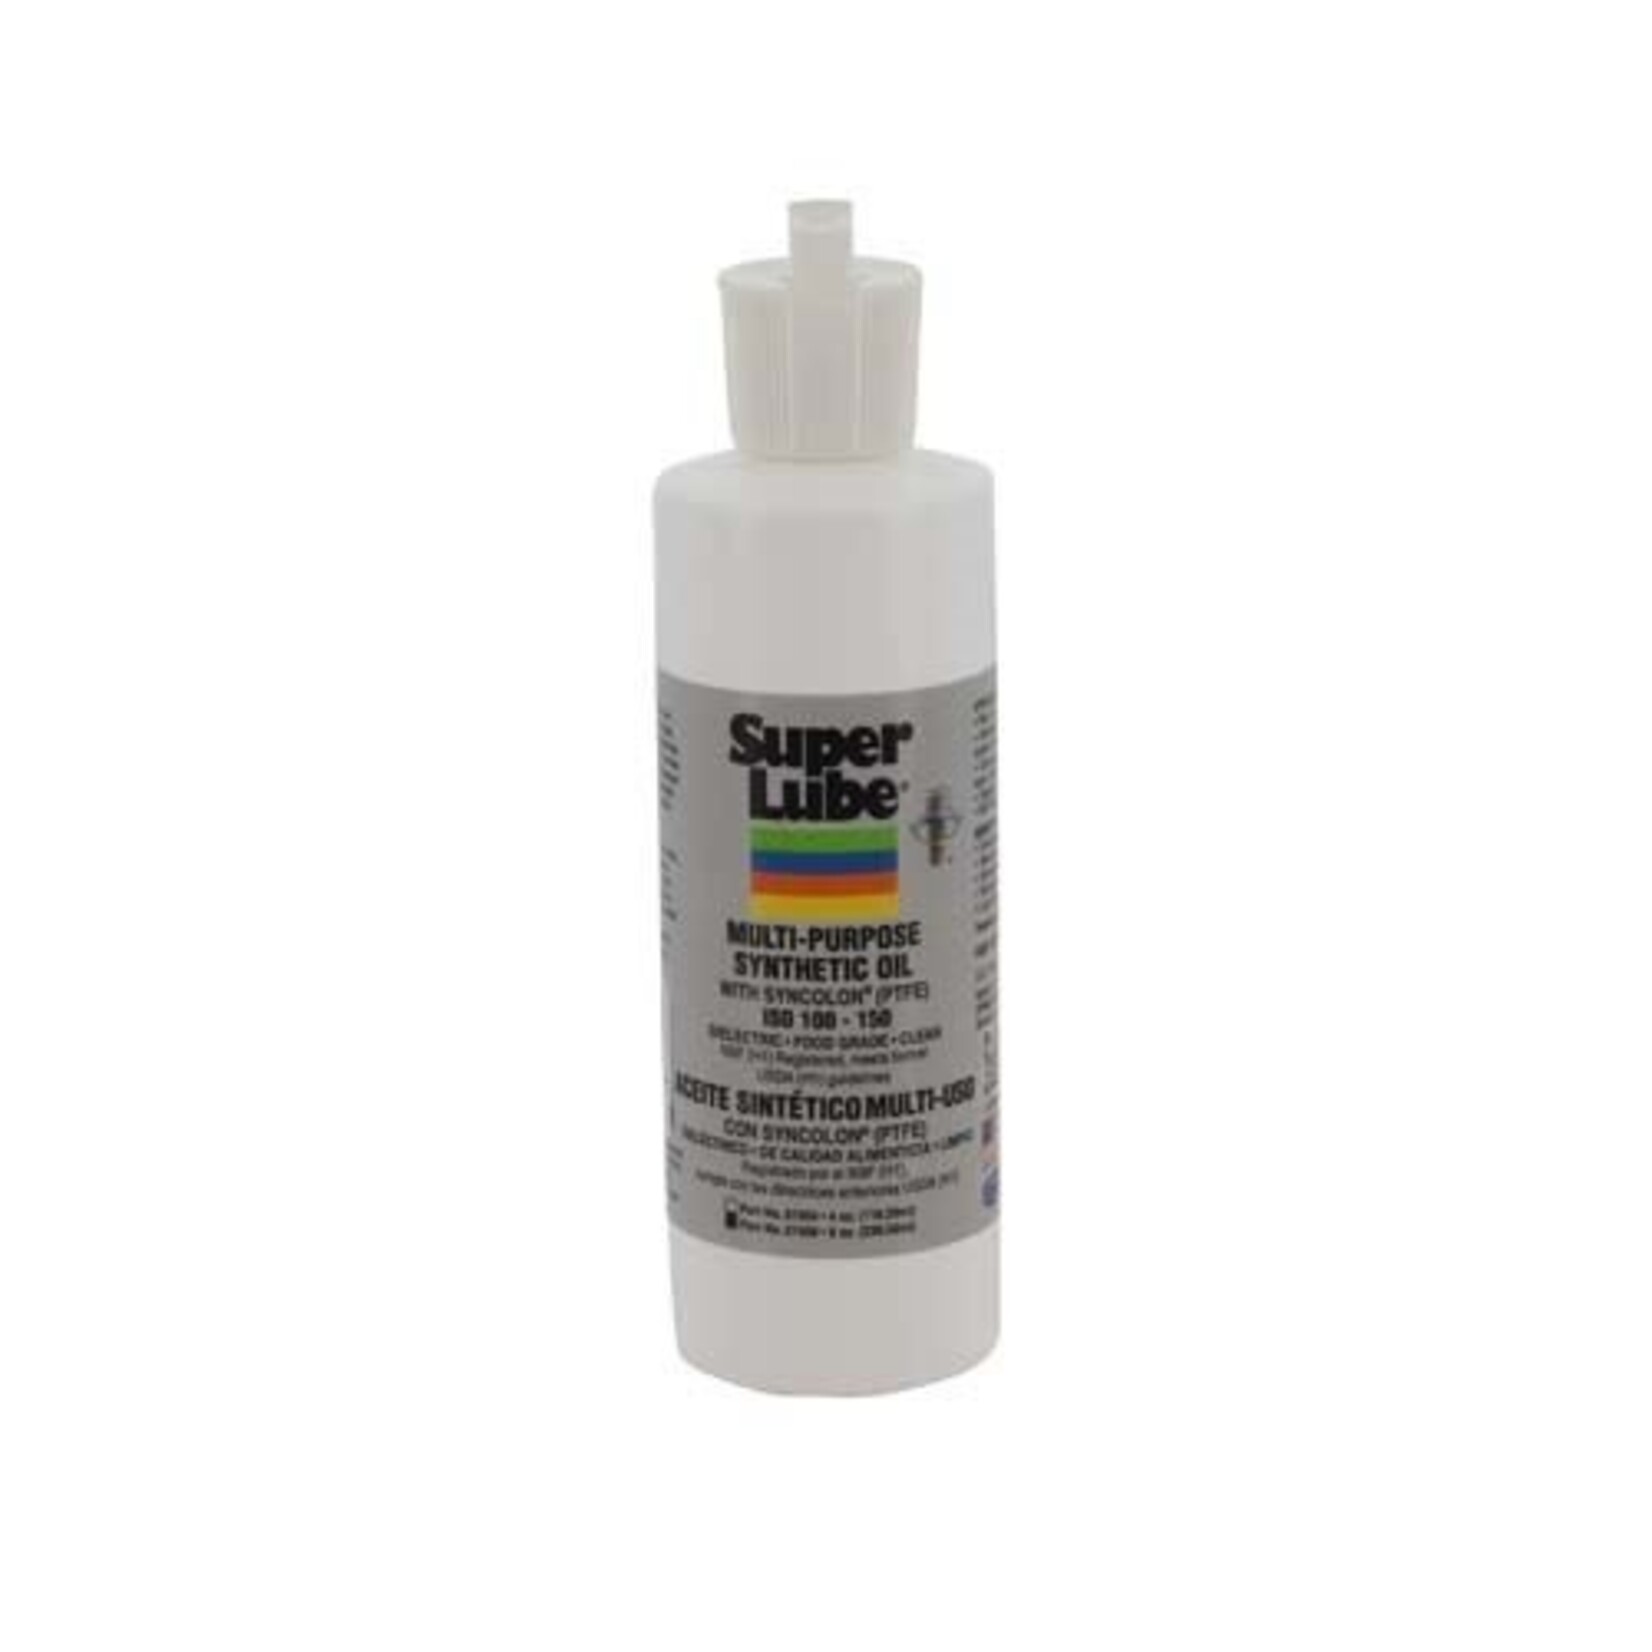 Super Lube Super Lube® Multi-Use Synthetic Oil with Syncolon